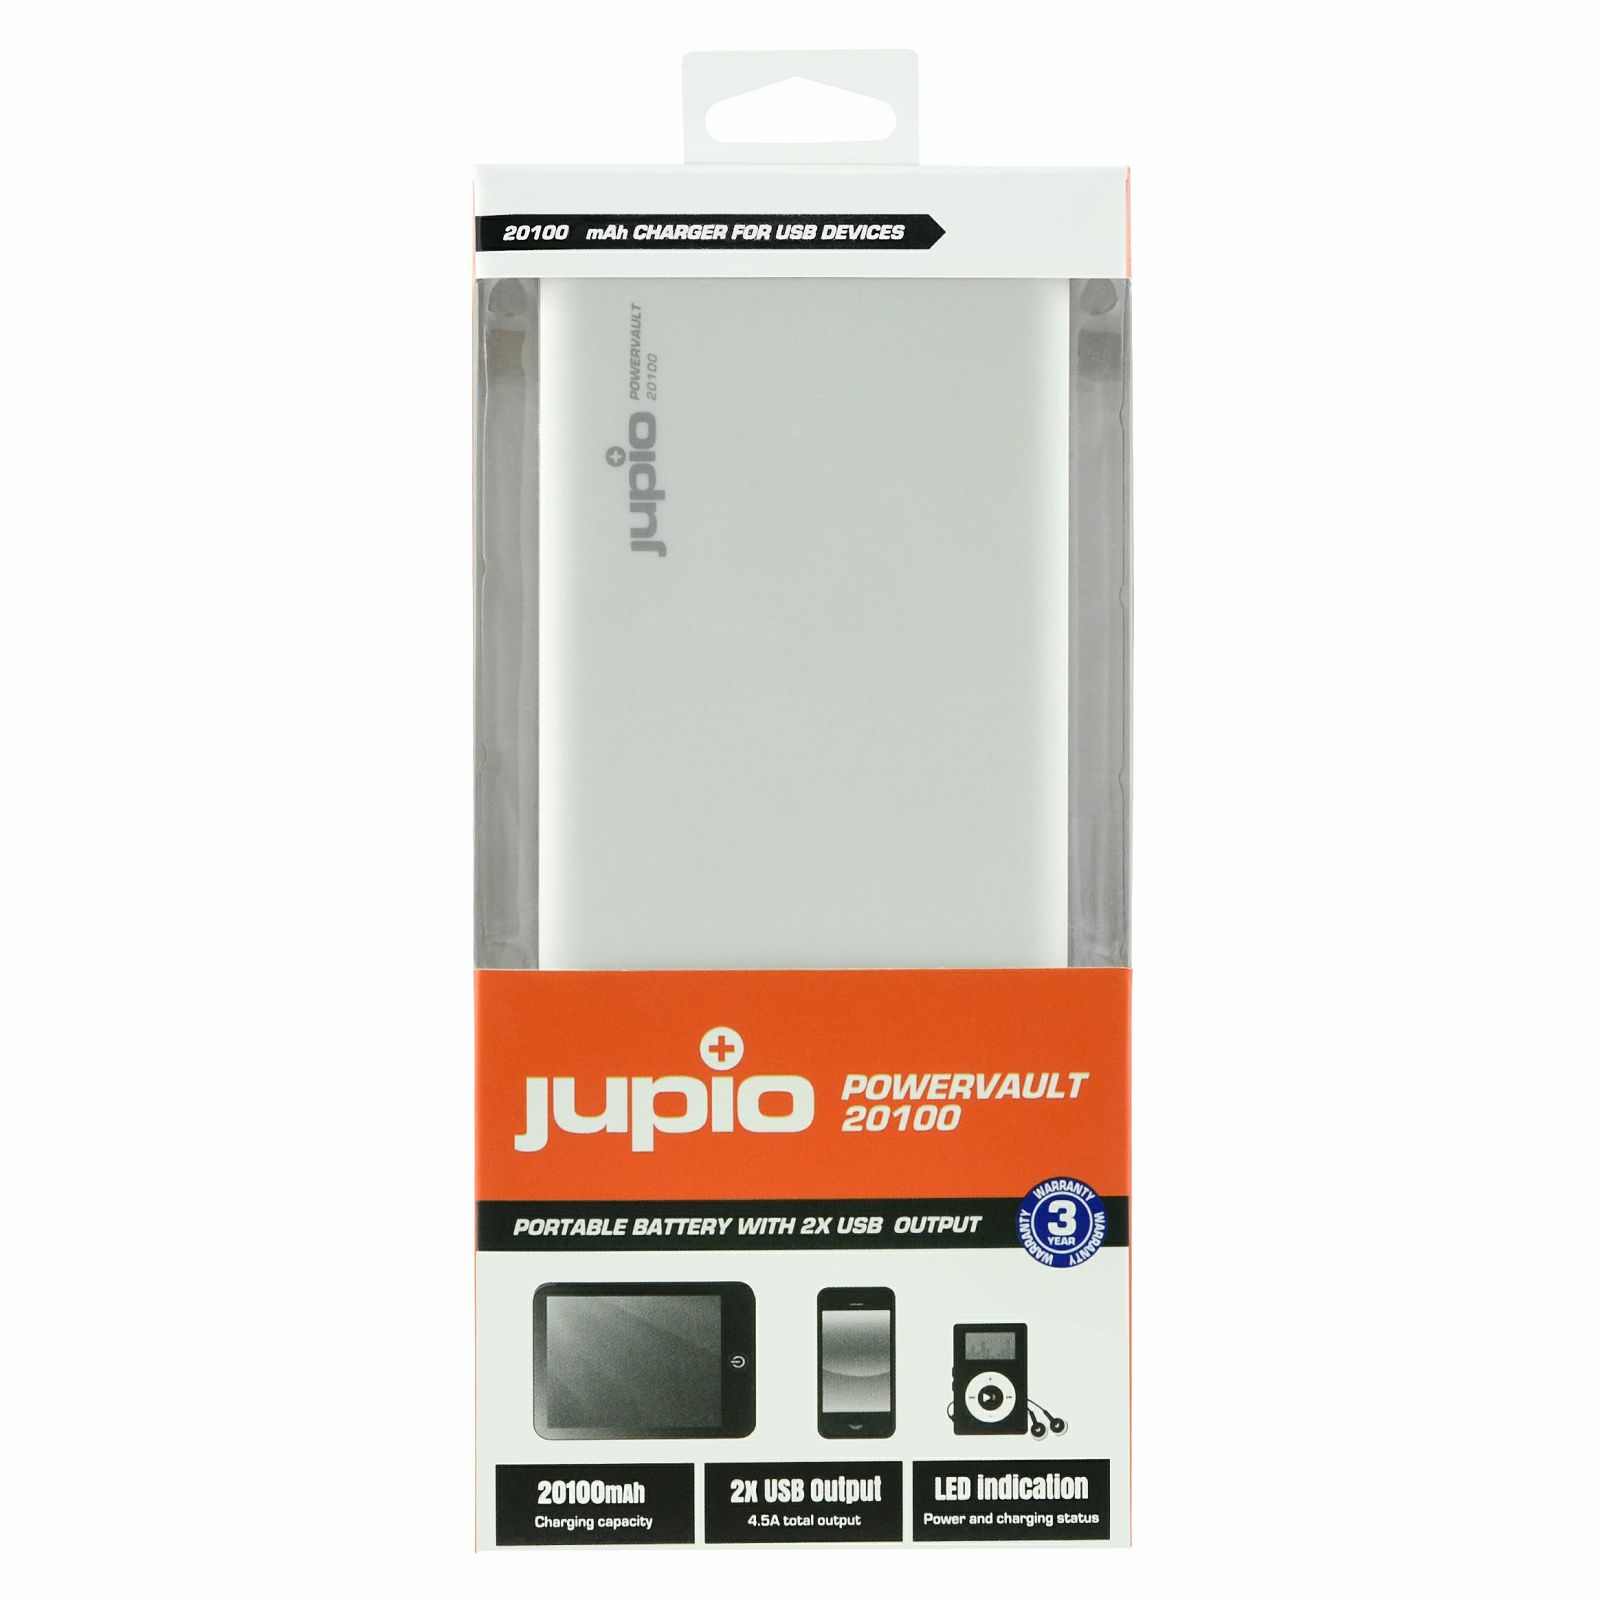 Jupio PowerVault 20100 mAh JPV0080 napajanje za mobitele, fotoaparate, baterije, tablete